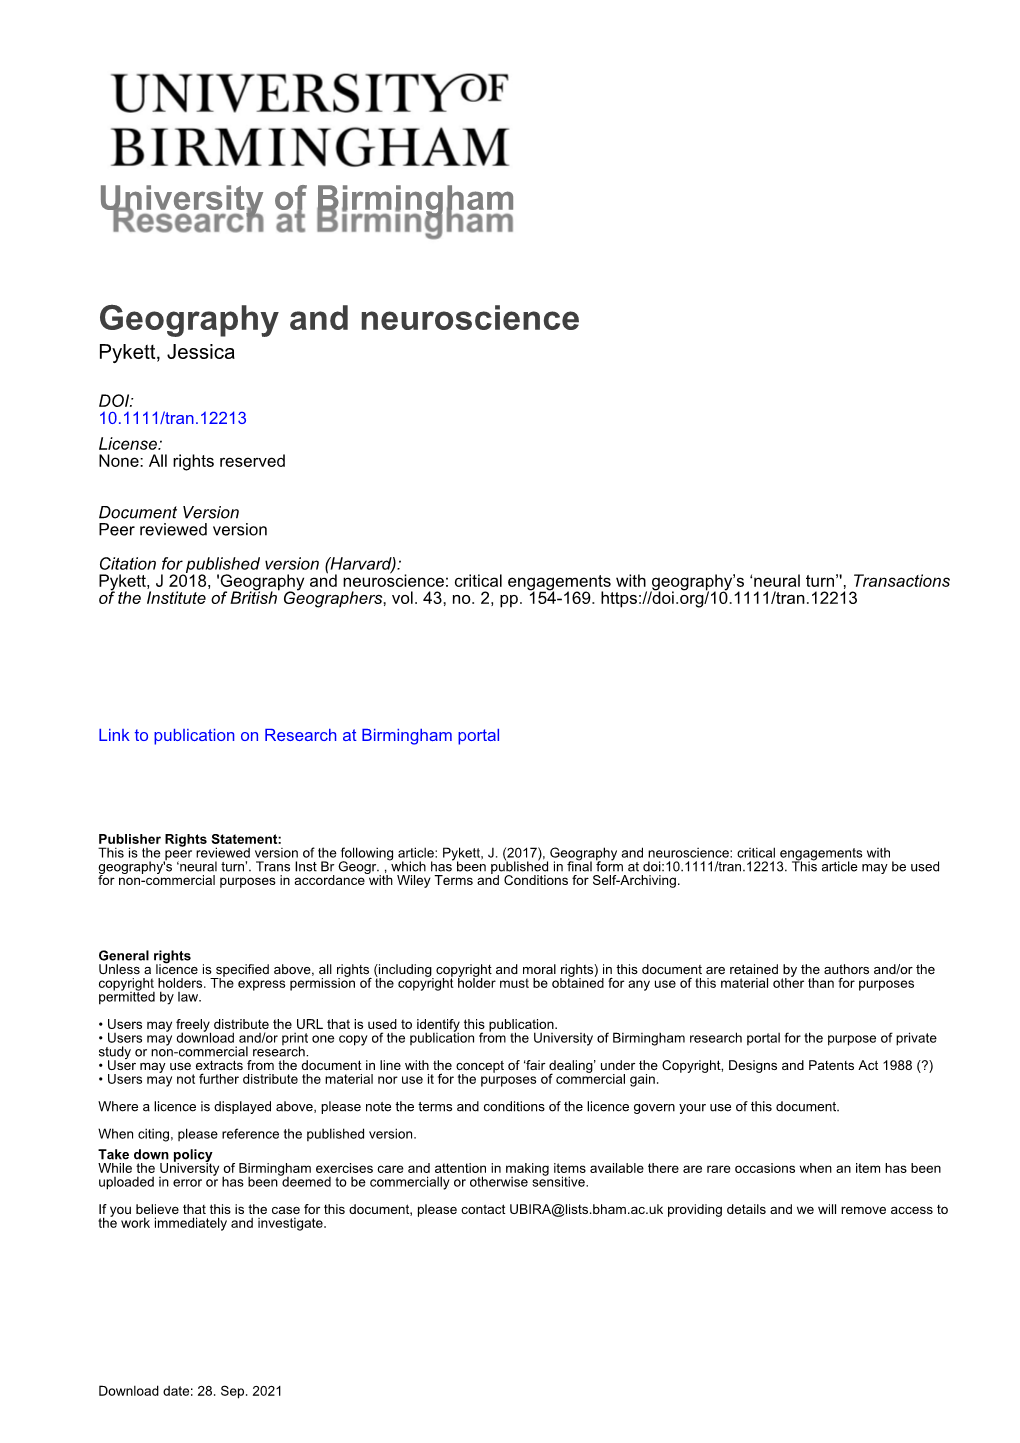 University of Birmingham Geography and Neuroscience